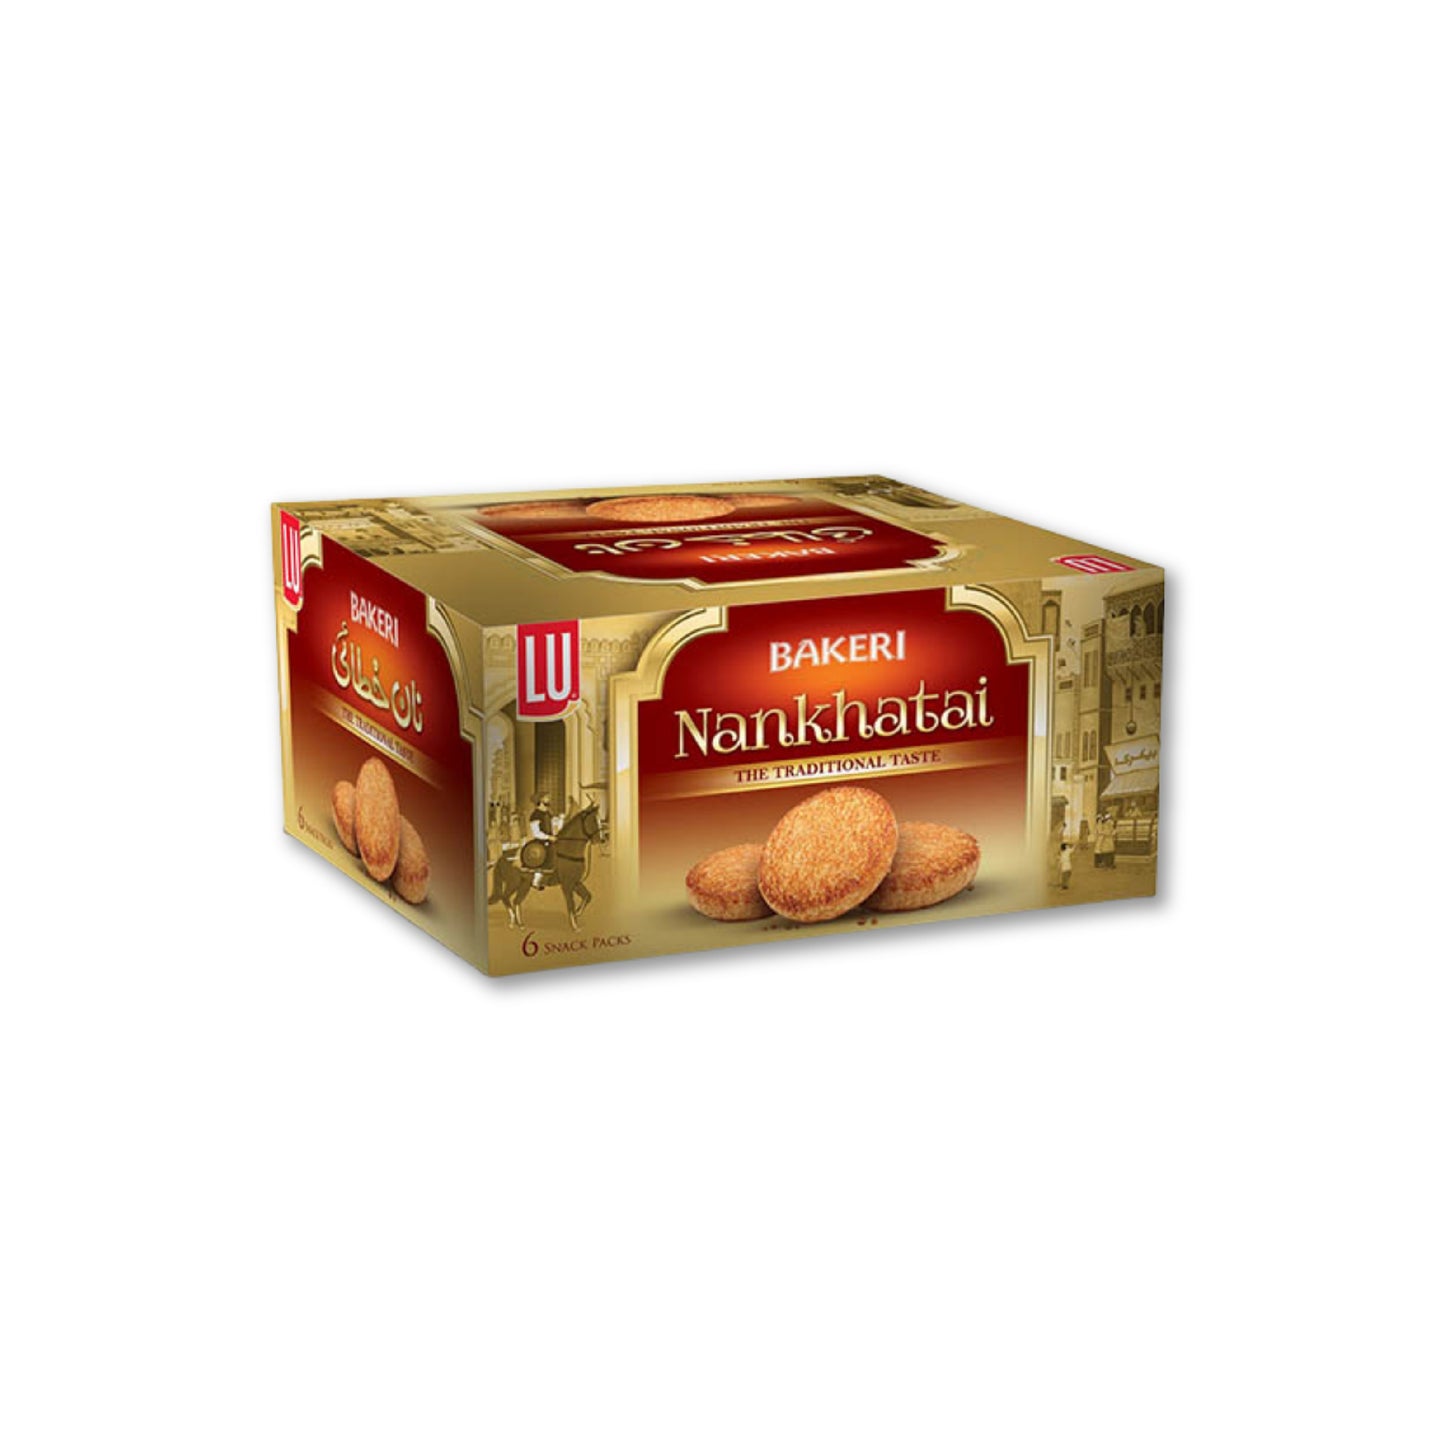 Lu Bakeri Nan Khatai Snack Pack 6Pcs Box